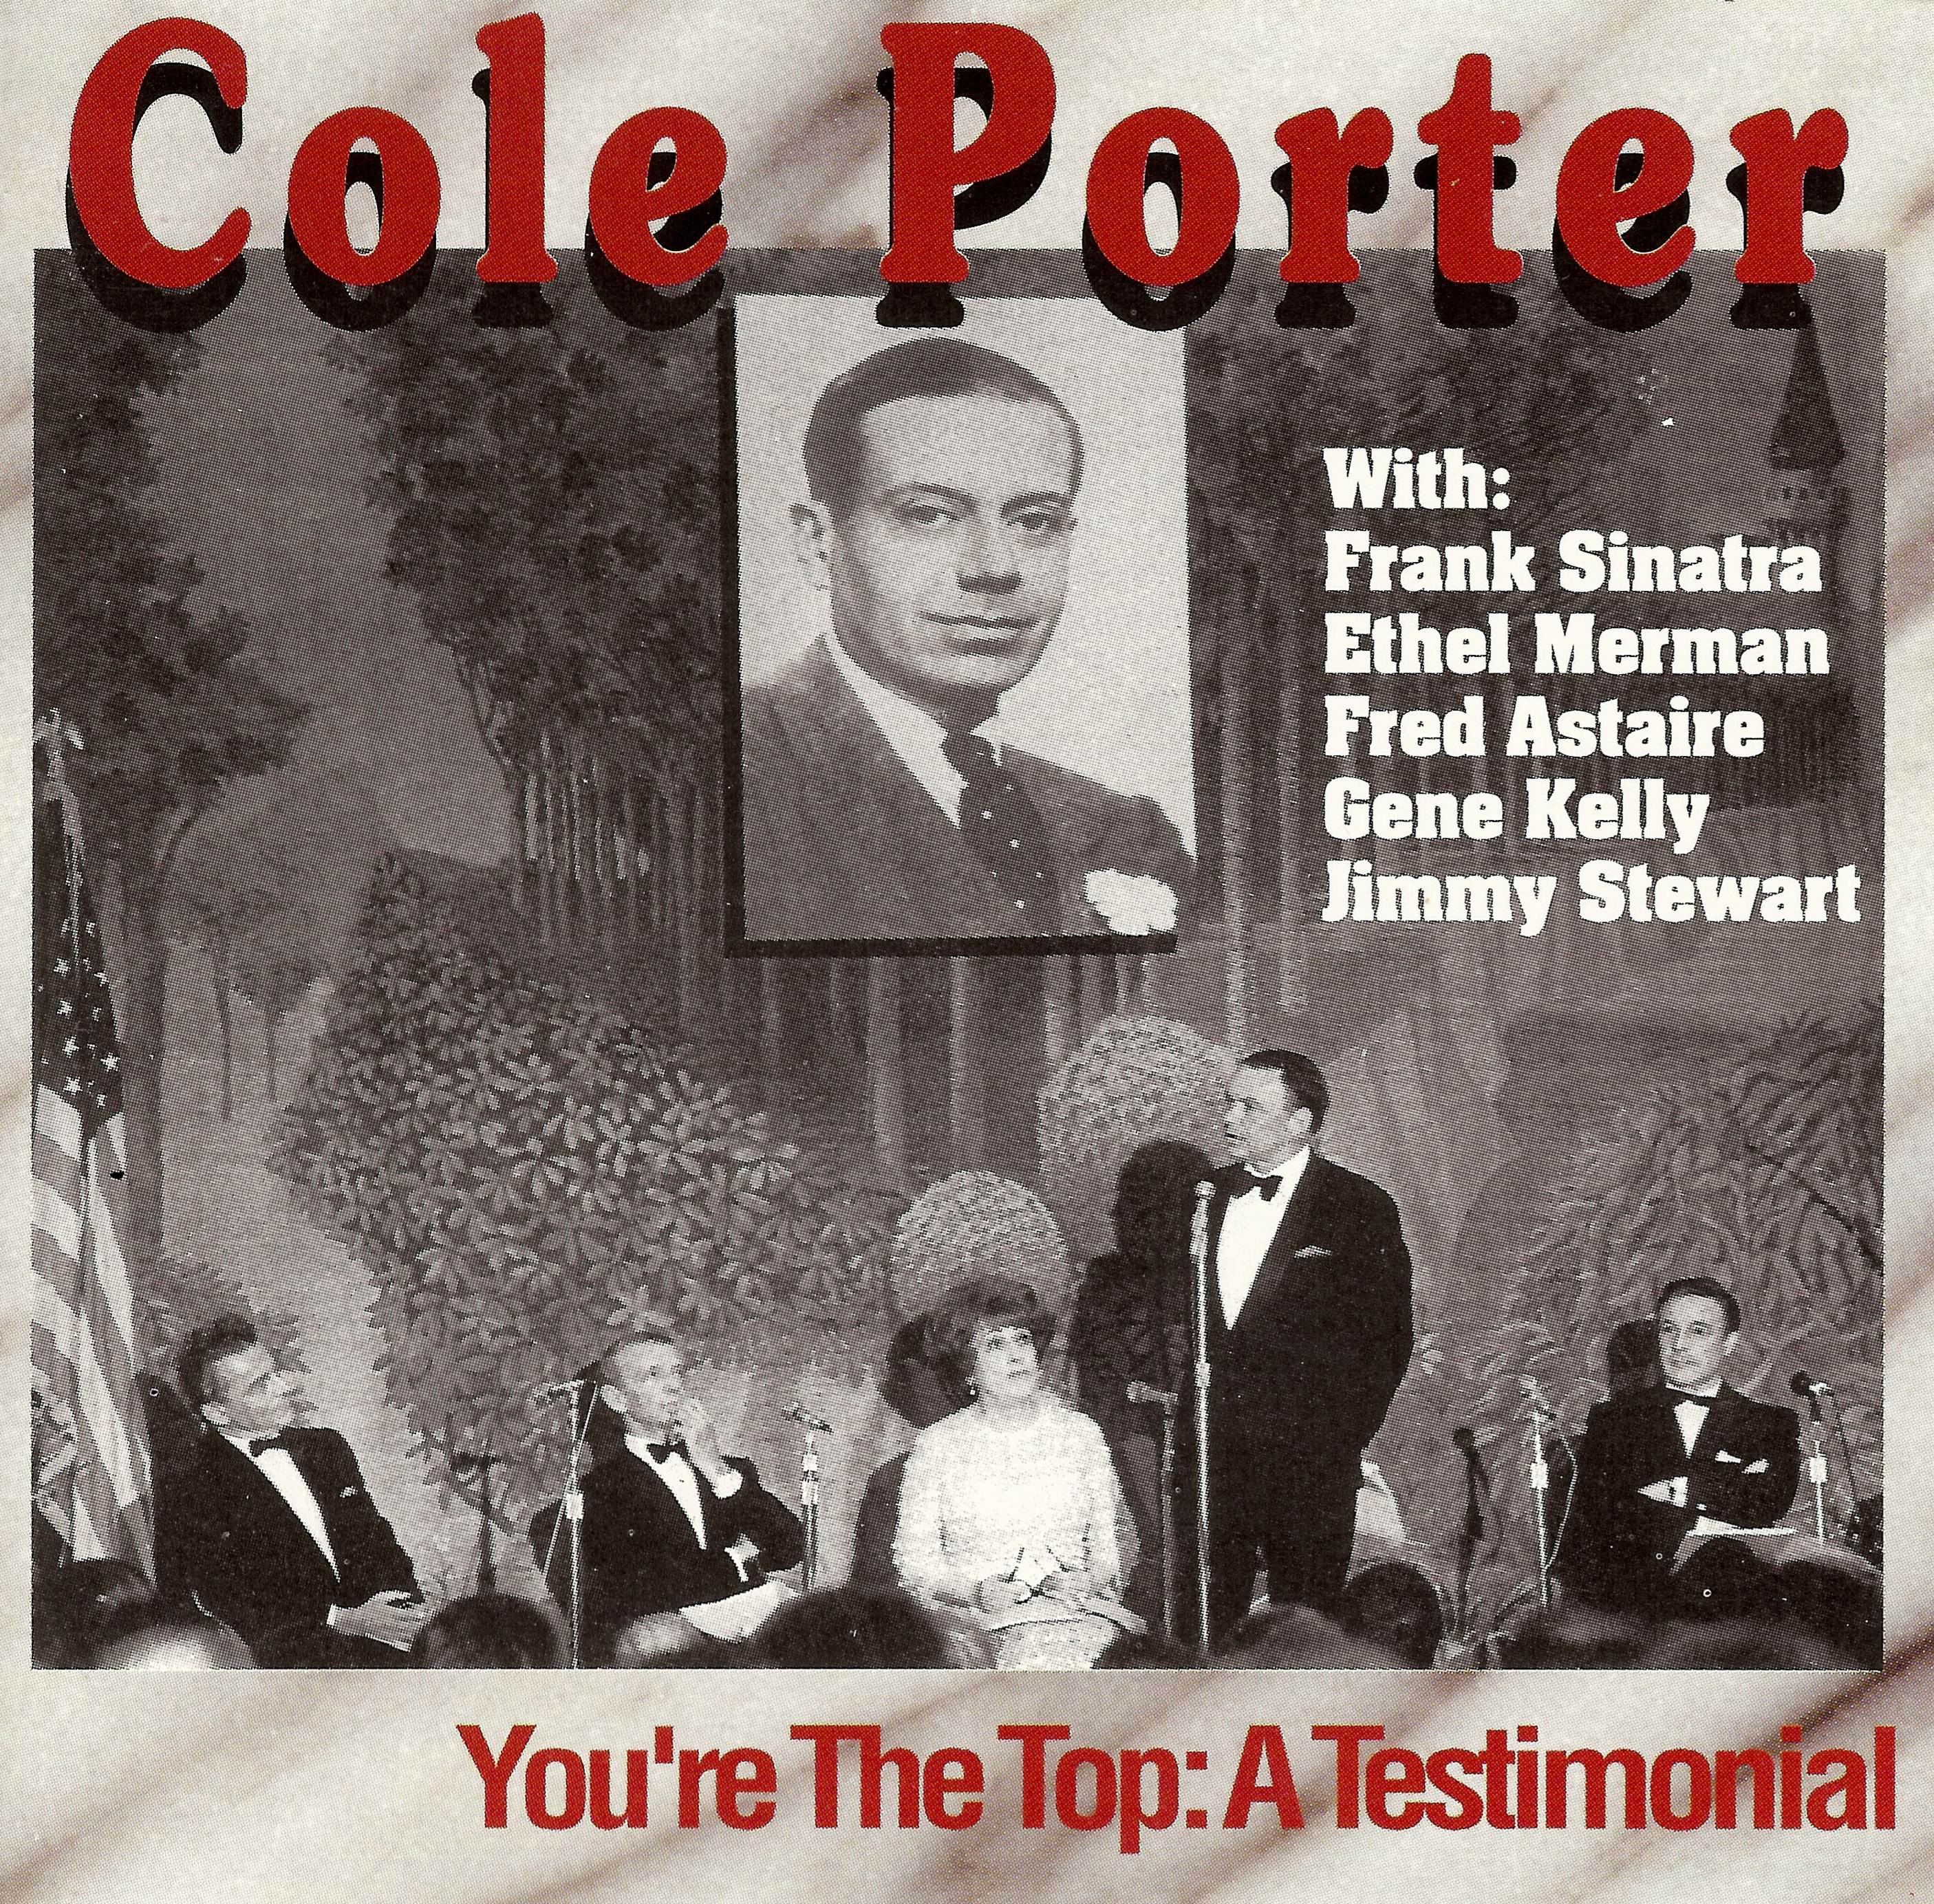 Cole Porter A Testimonial